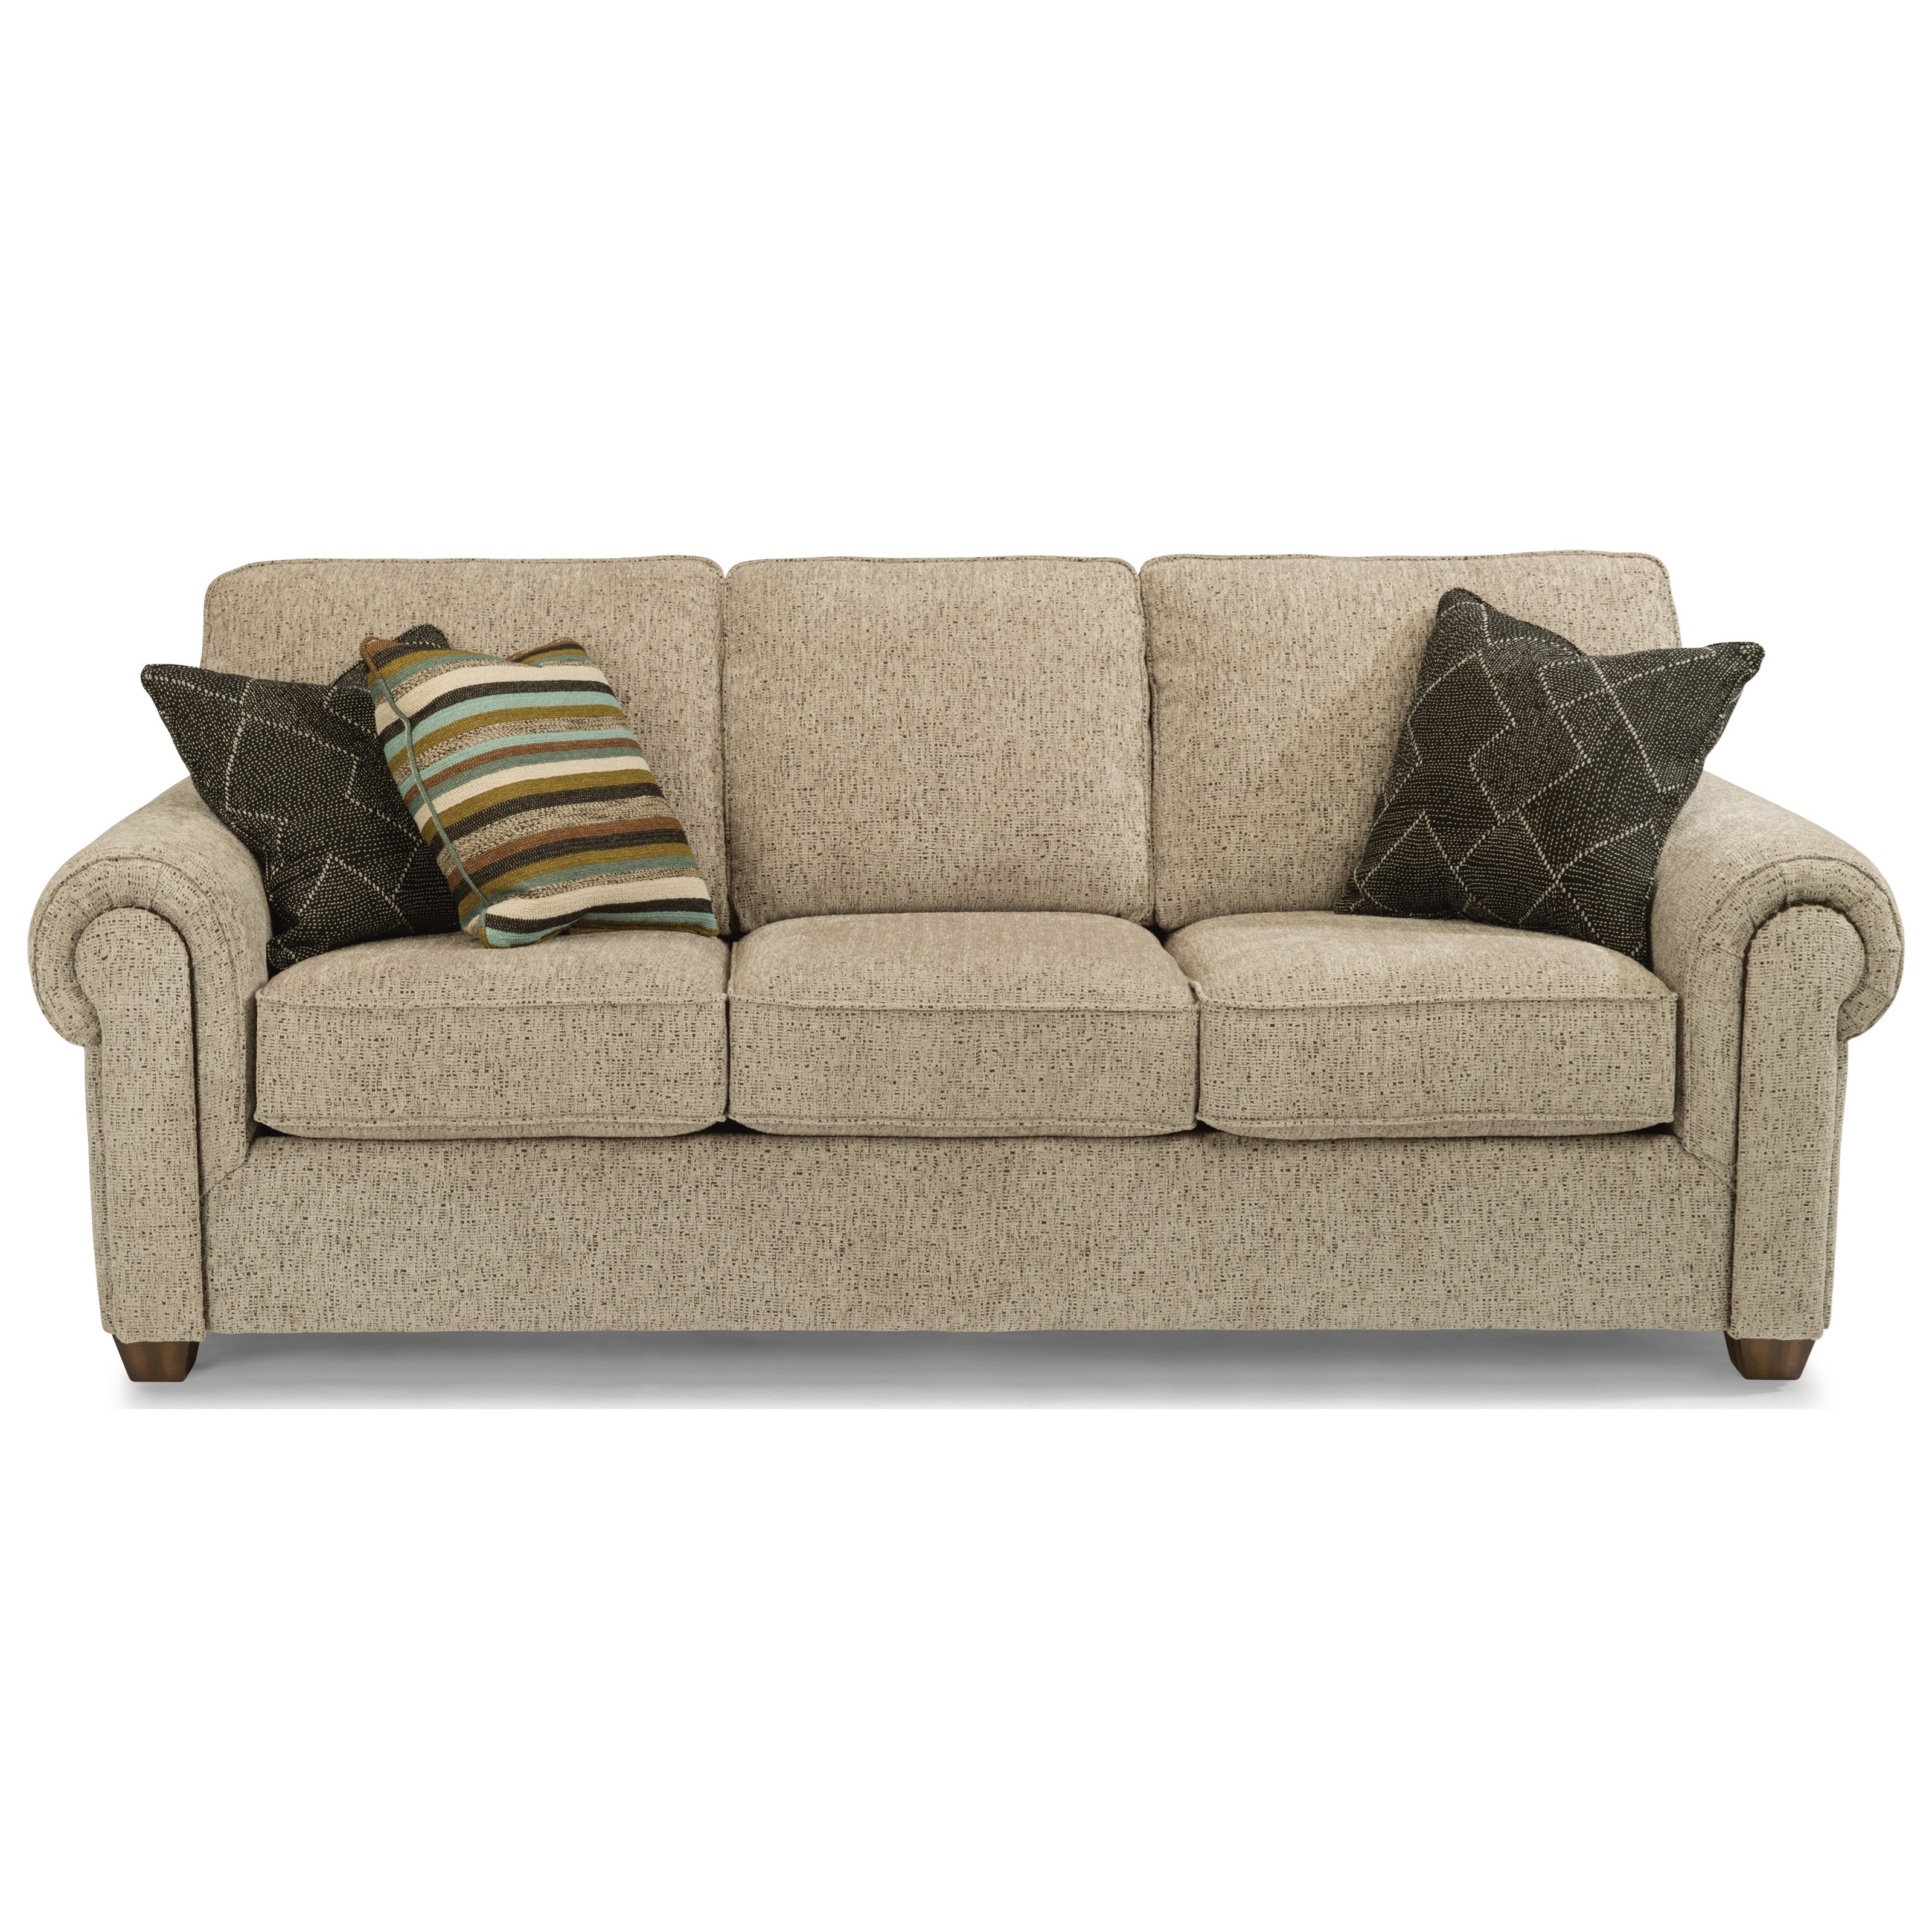 Customizable Sofa Options